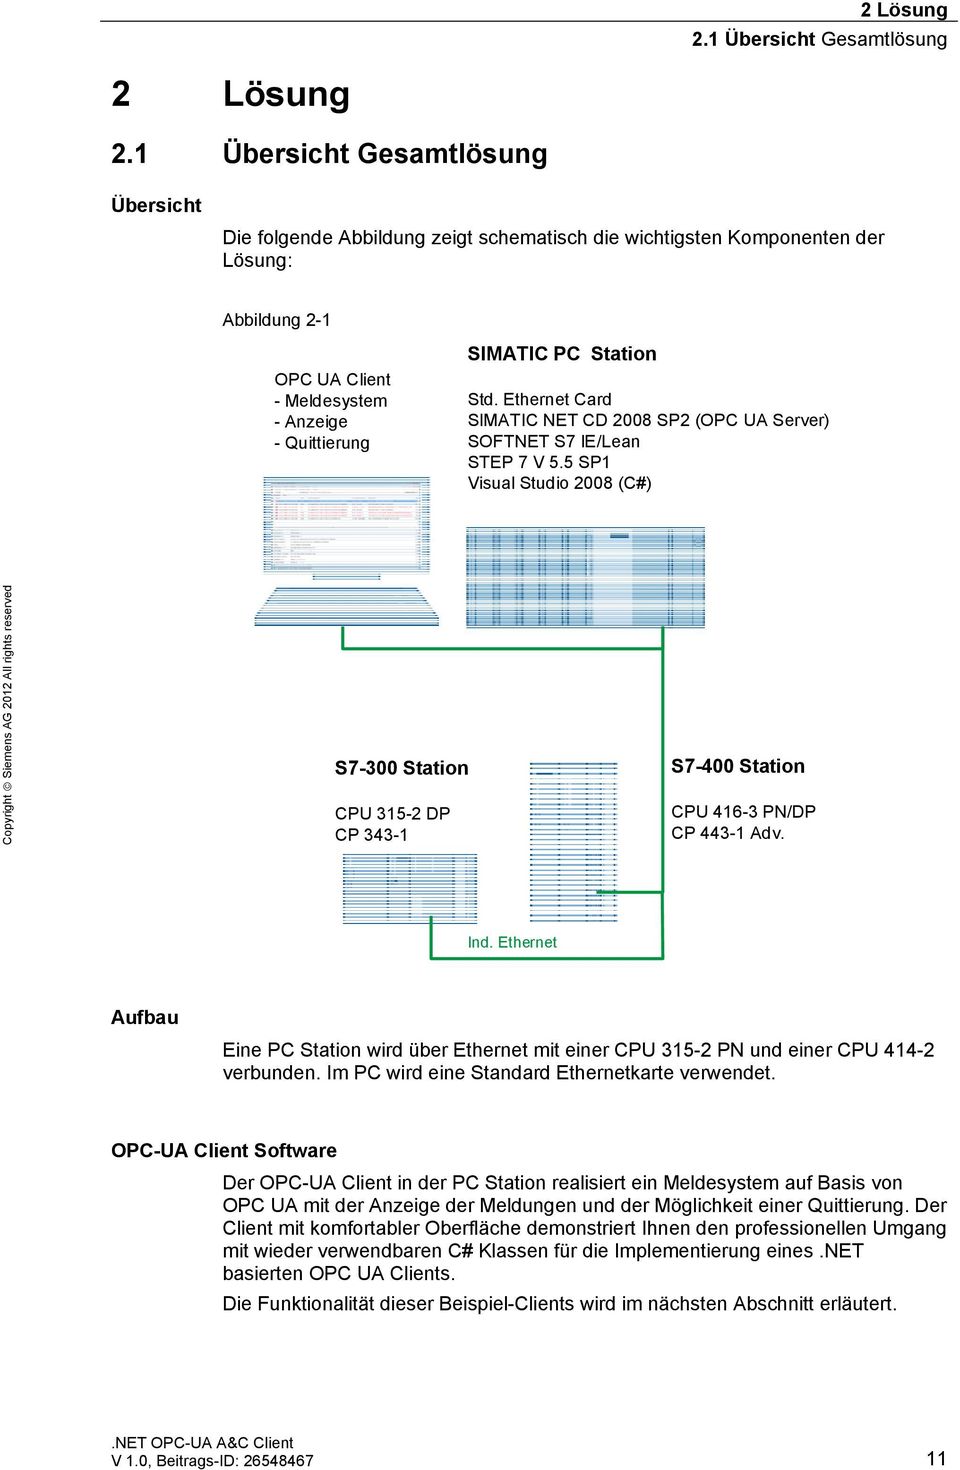 Std. Ethernet Card SIMATIC NET CD 2008 SP2 (OPC UA Server) SOFTNET S7 IE/Lean STEP 7 V 5.5 SP1 Visual Studio 2008 (C#) S7-300 Station CPU 315-2 DP CP 343-1 S7-400 Station CPU 416-3 PN/DP CP 443-1 Adv.